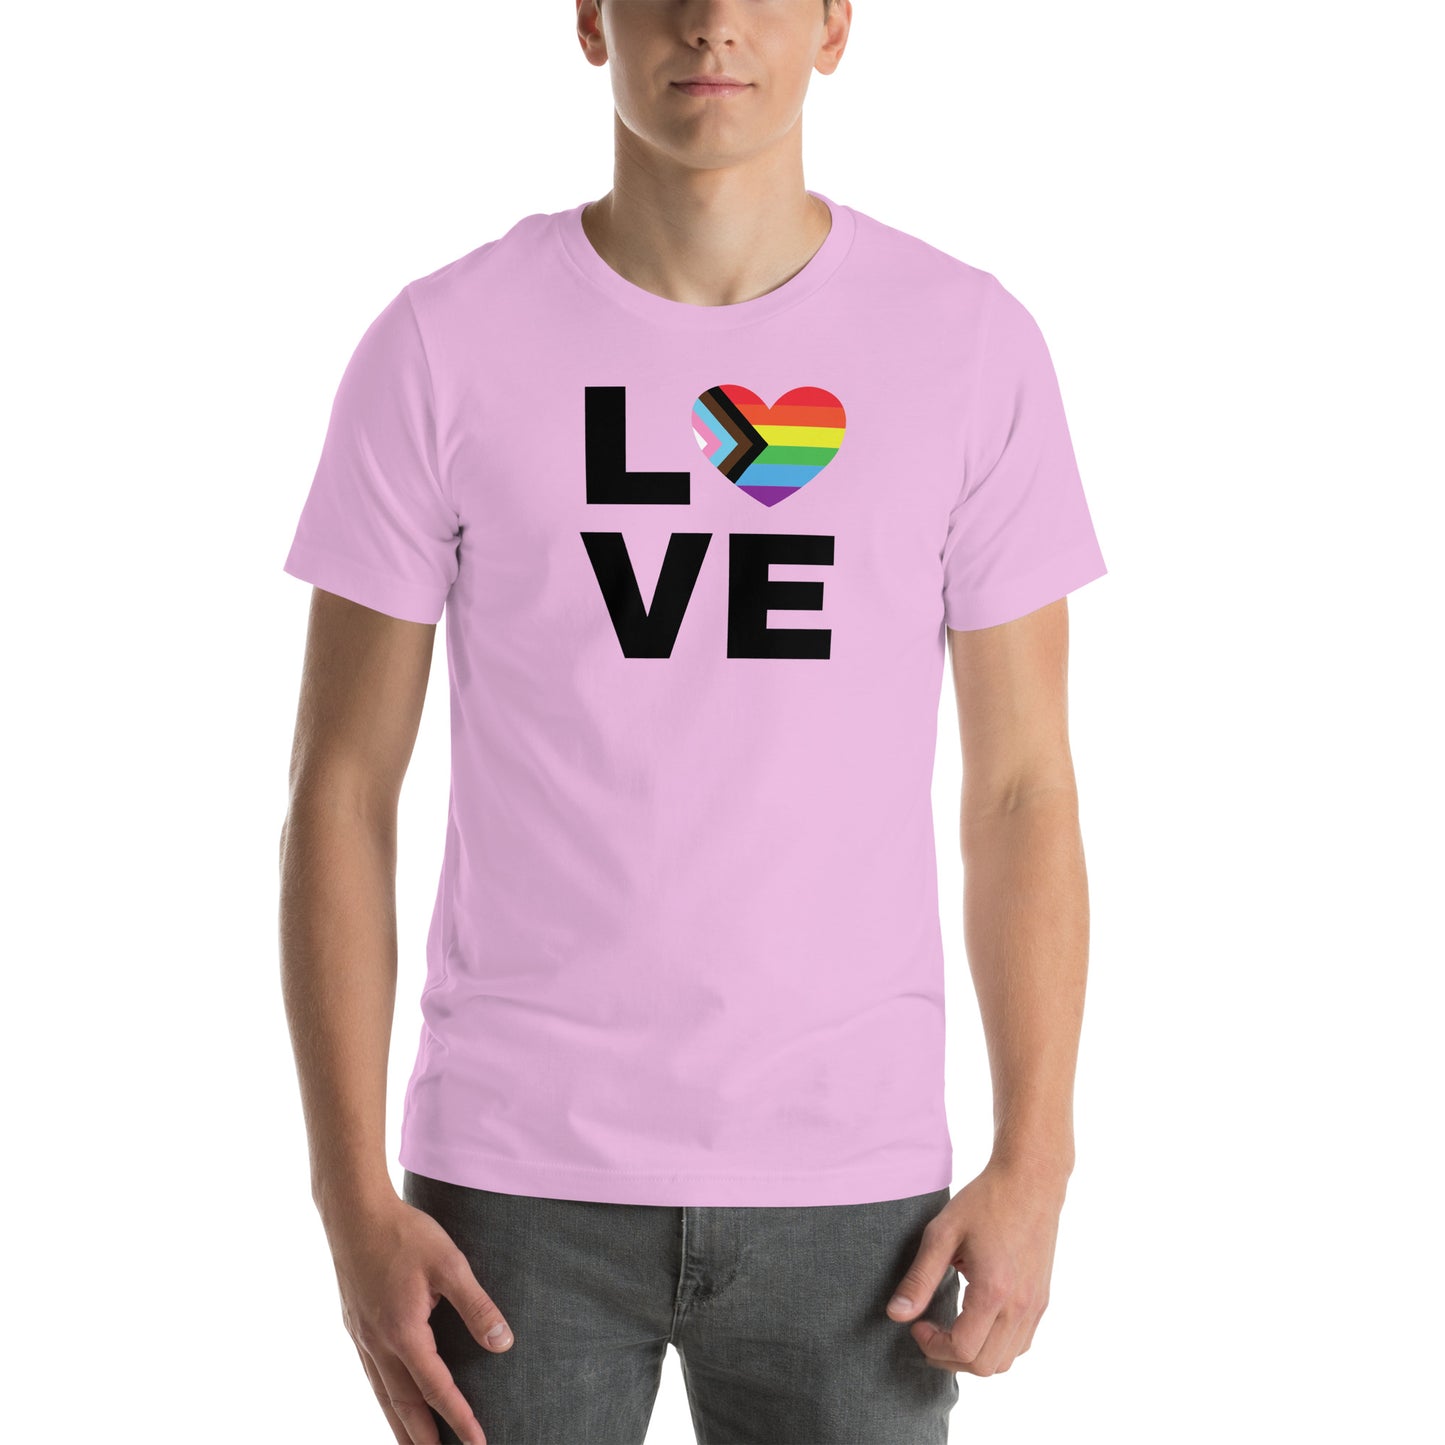 "LOVE" Unisex t-shirt